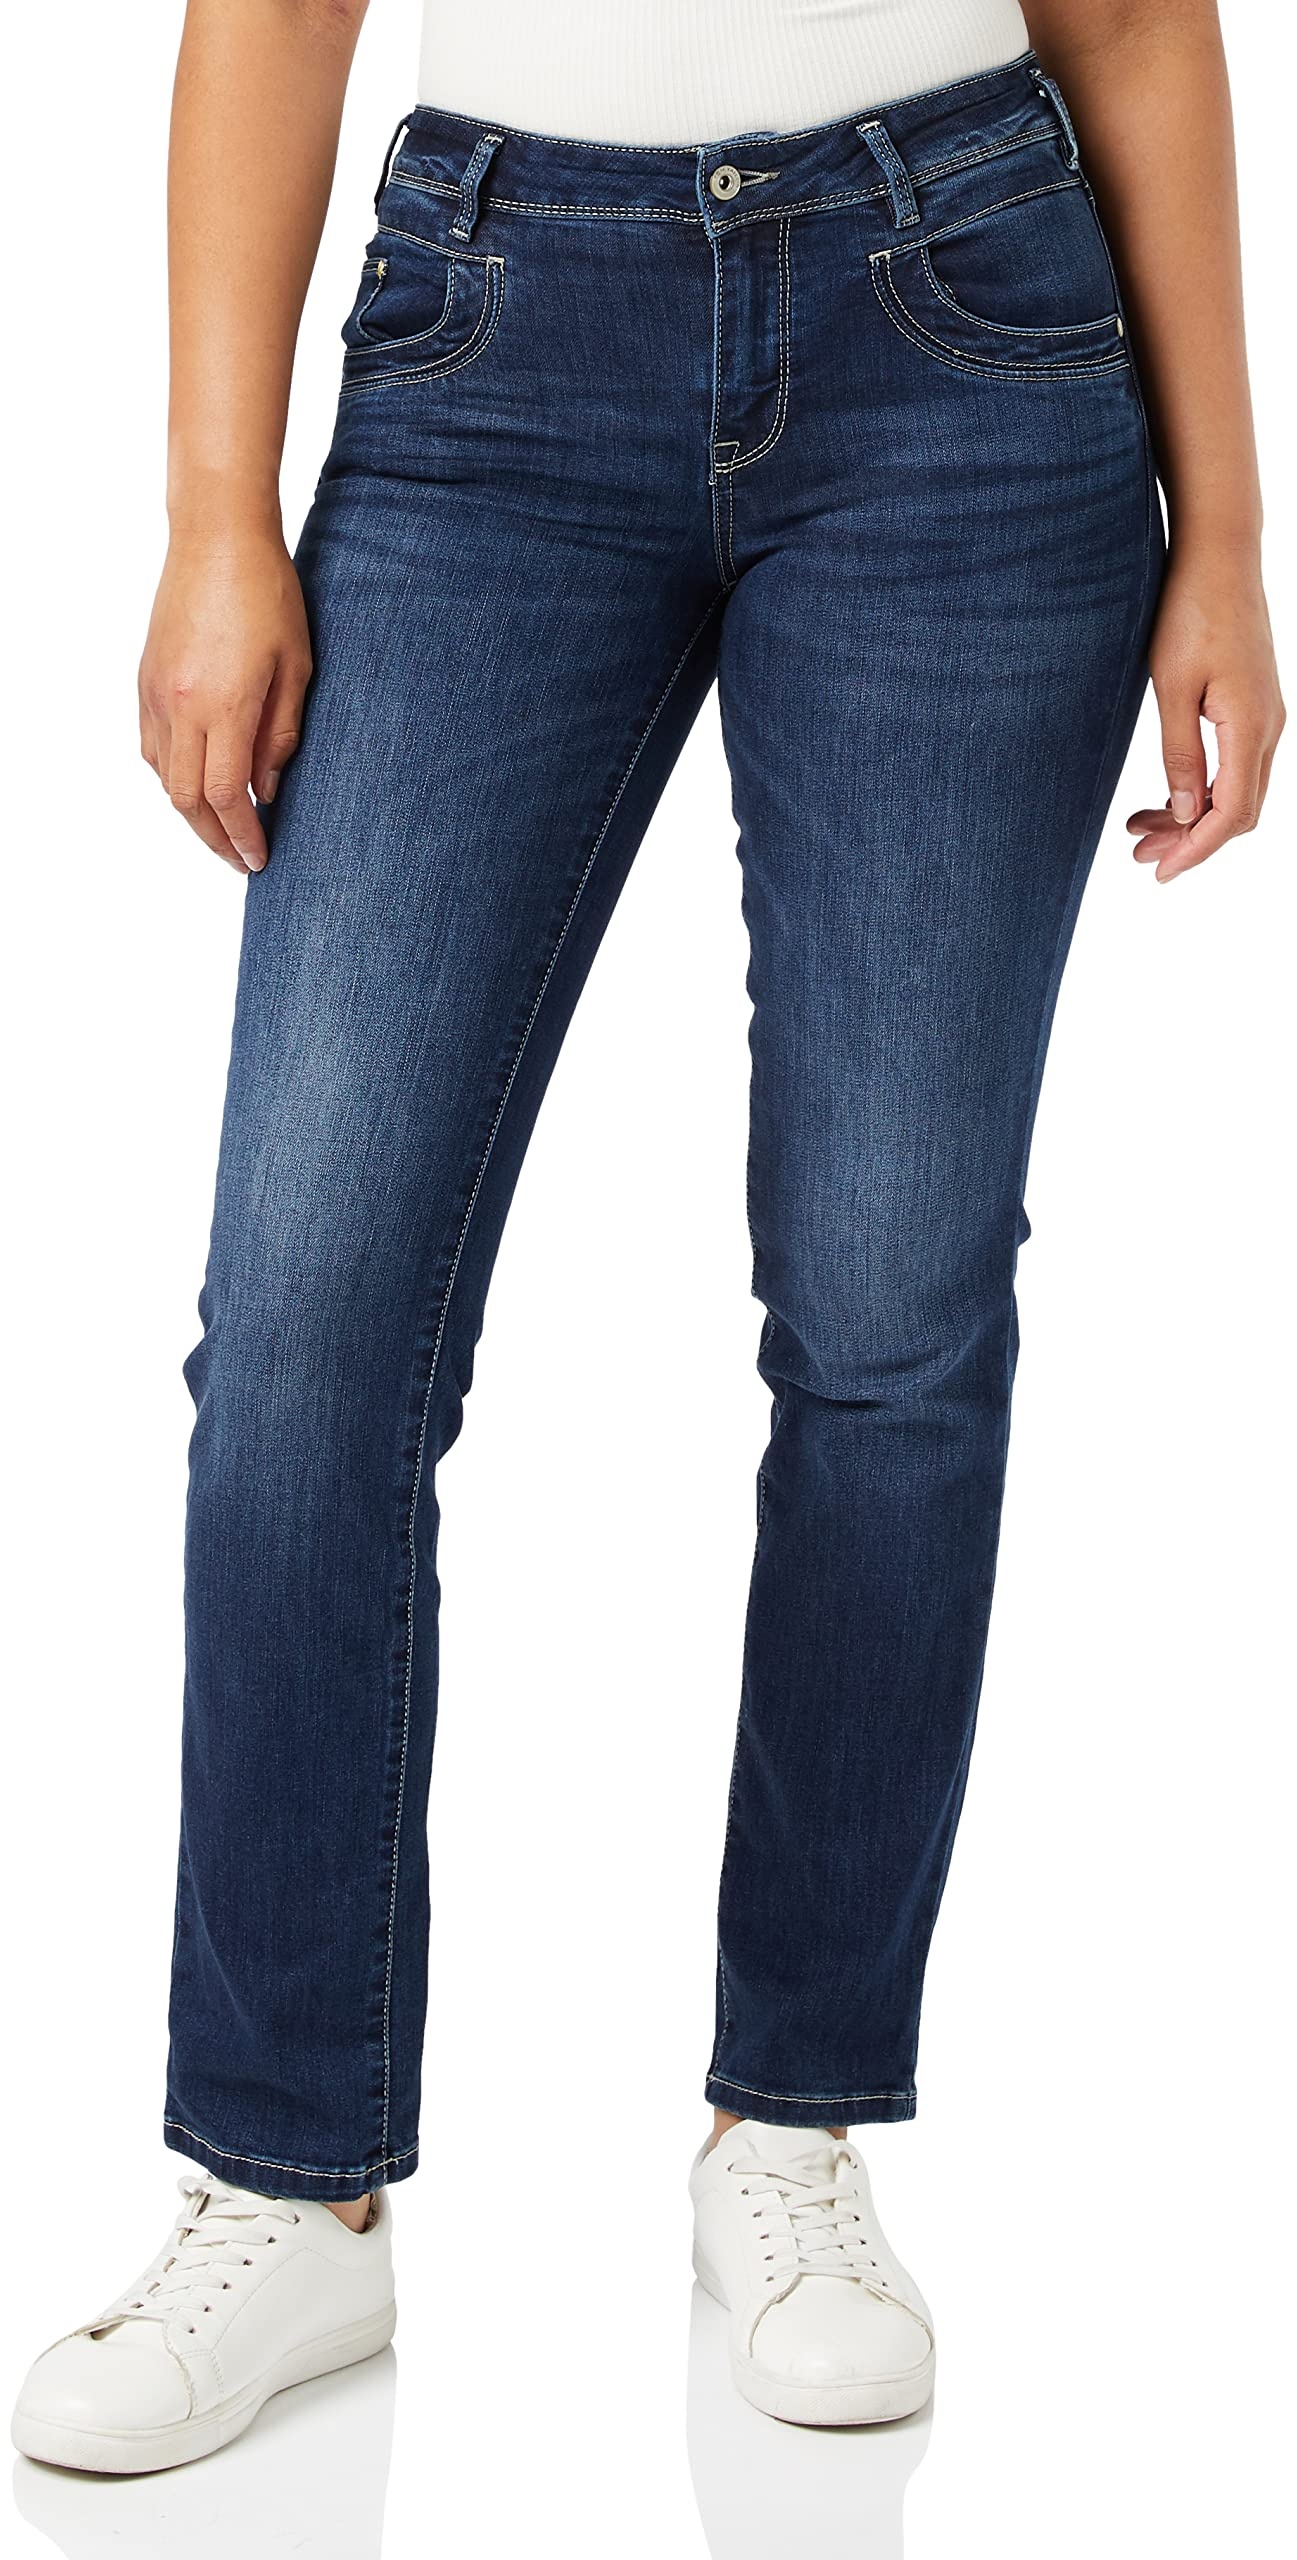 TOM TAILOR Damen 1008146 Alexa Straight Jeans, 10282 - Dark Stone Wash Denim, 29W / 34L EU